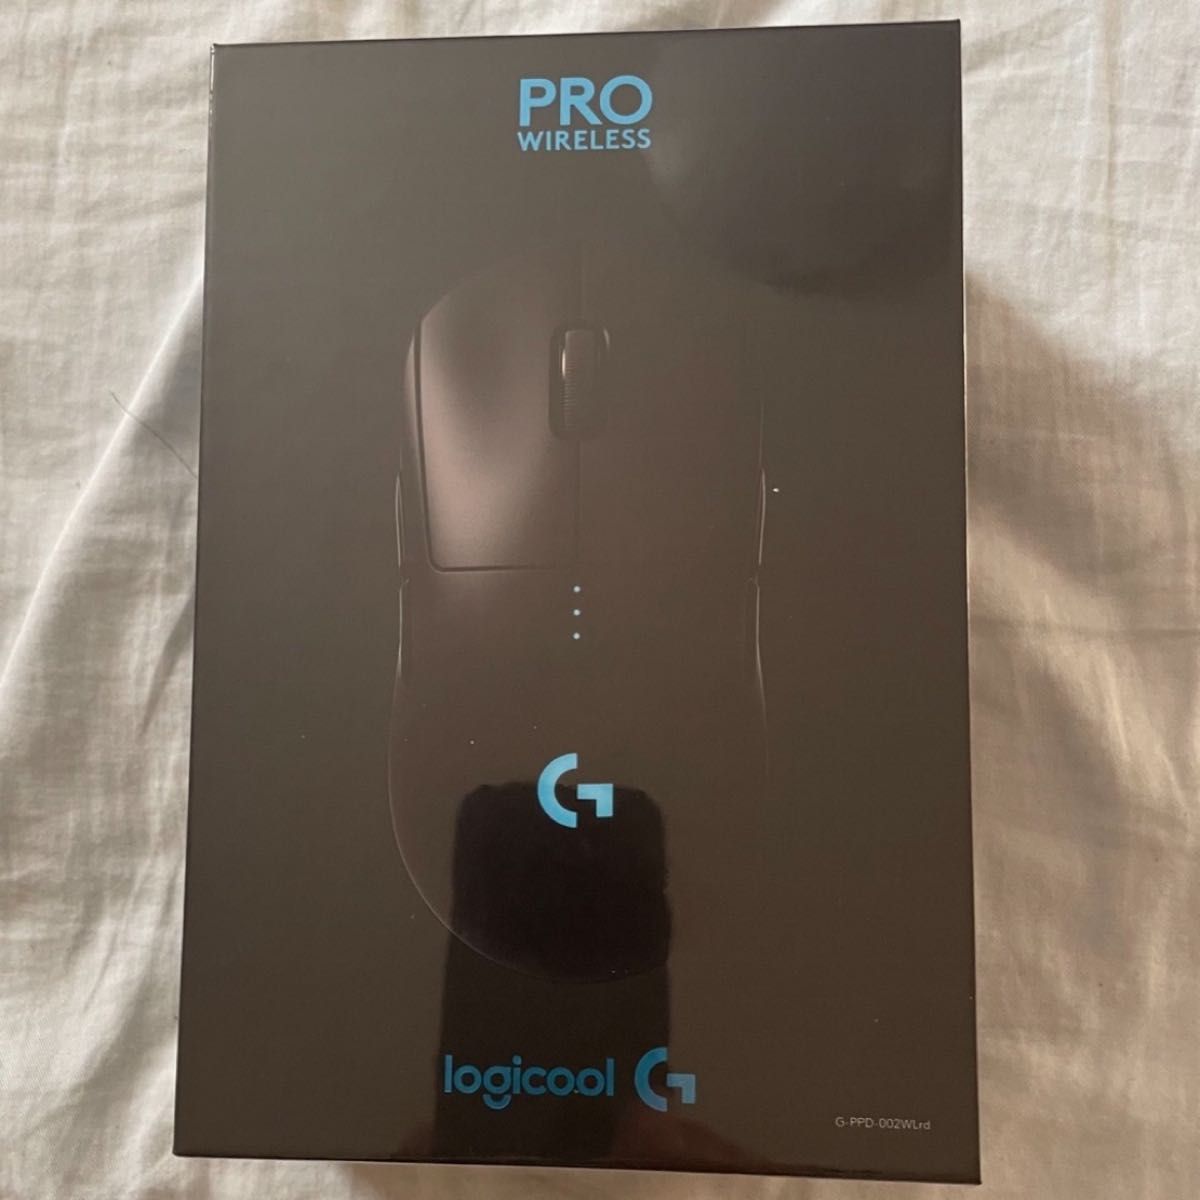 Logicool G PRO ゲーミングマウス G-PPD-002WLrd｜PayPayフリマ